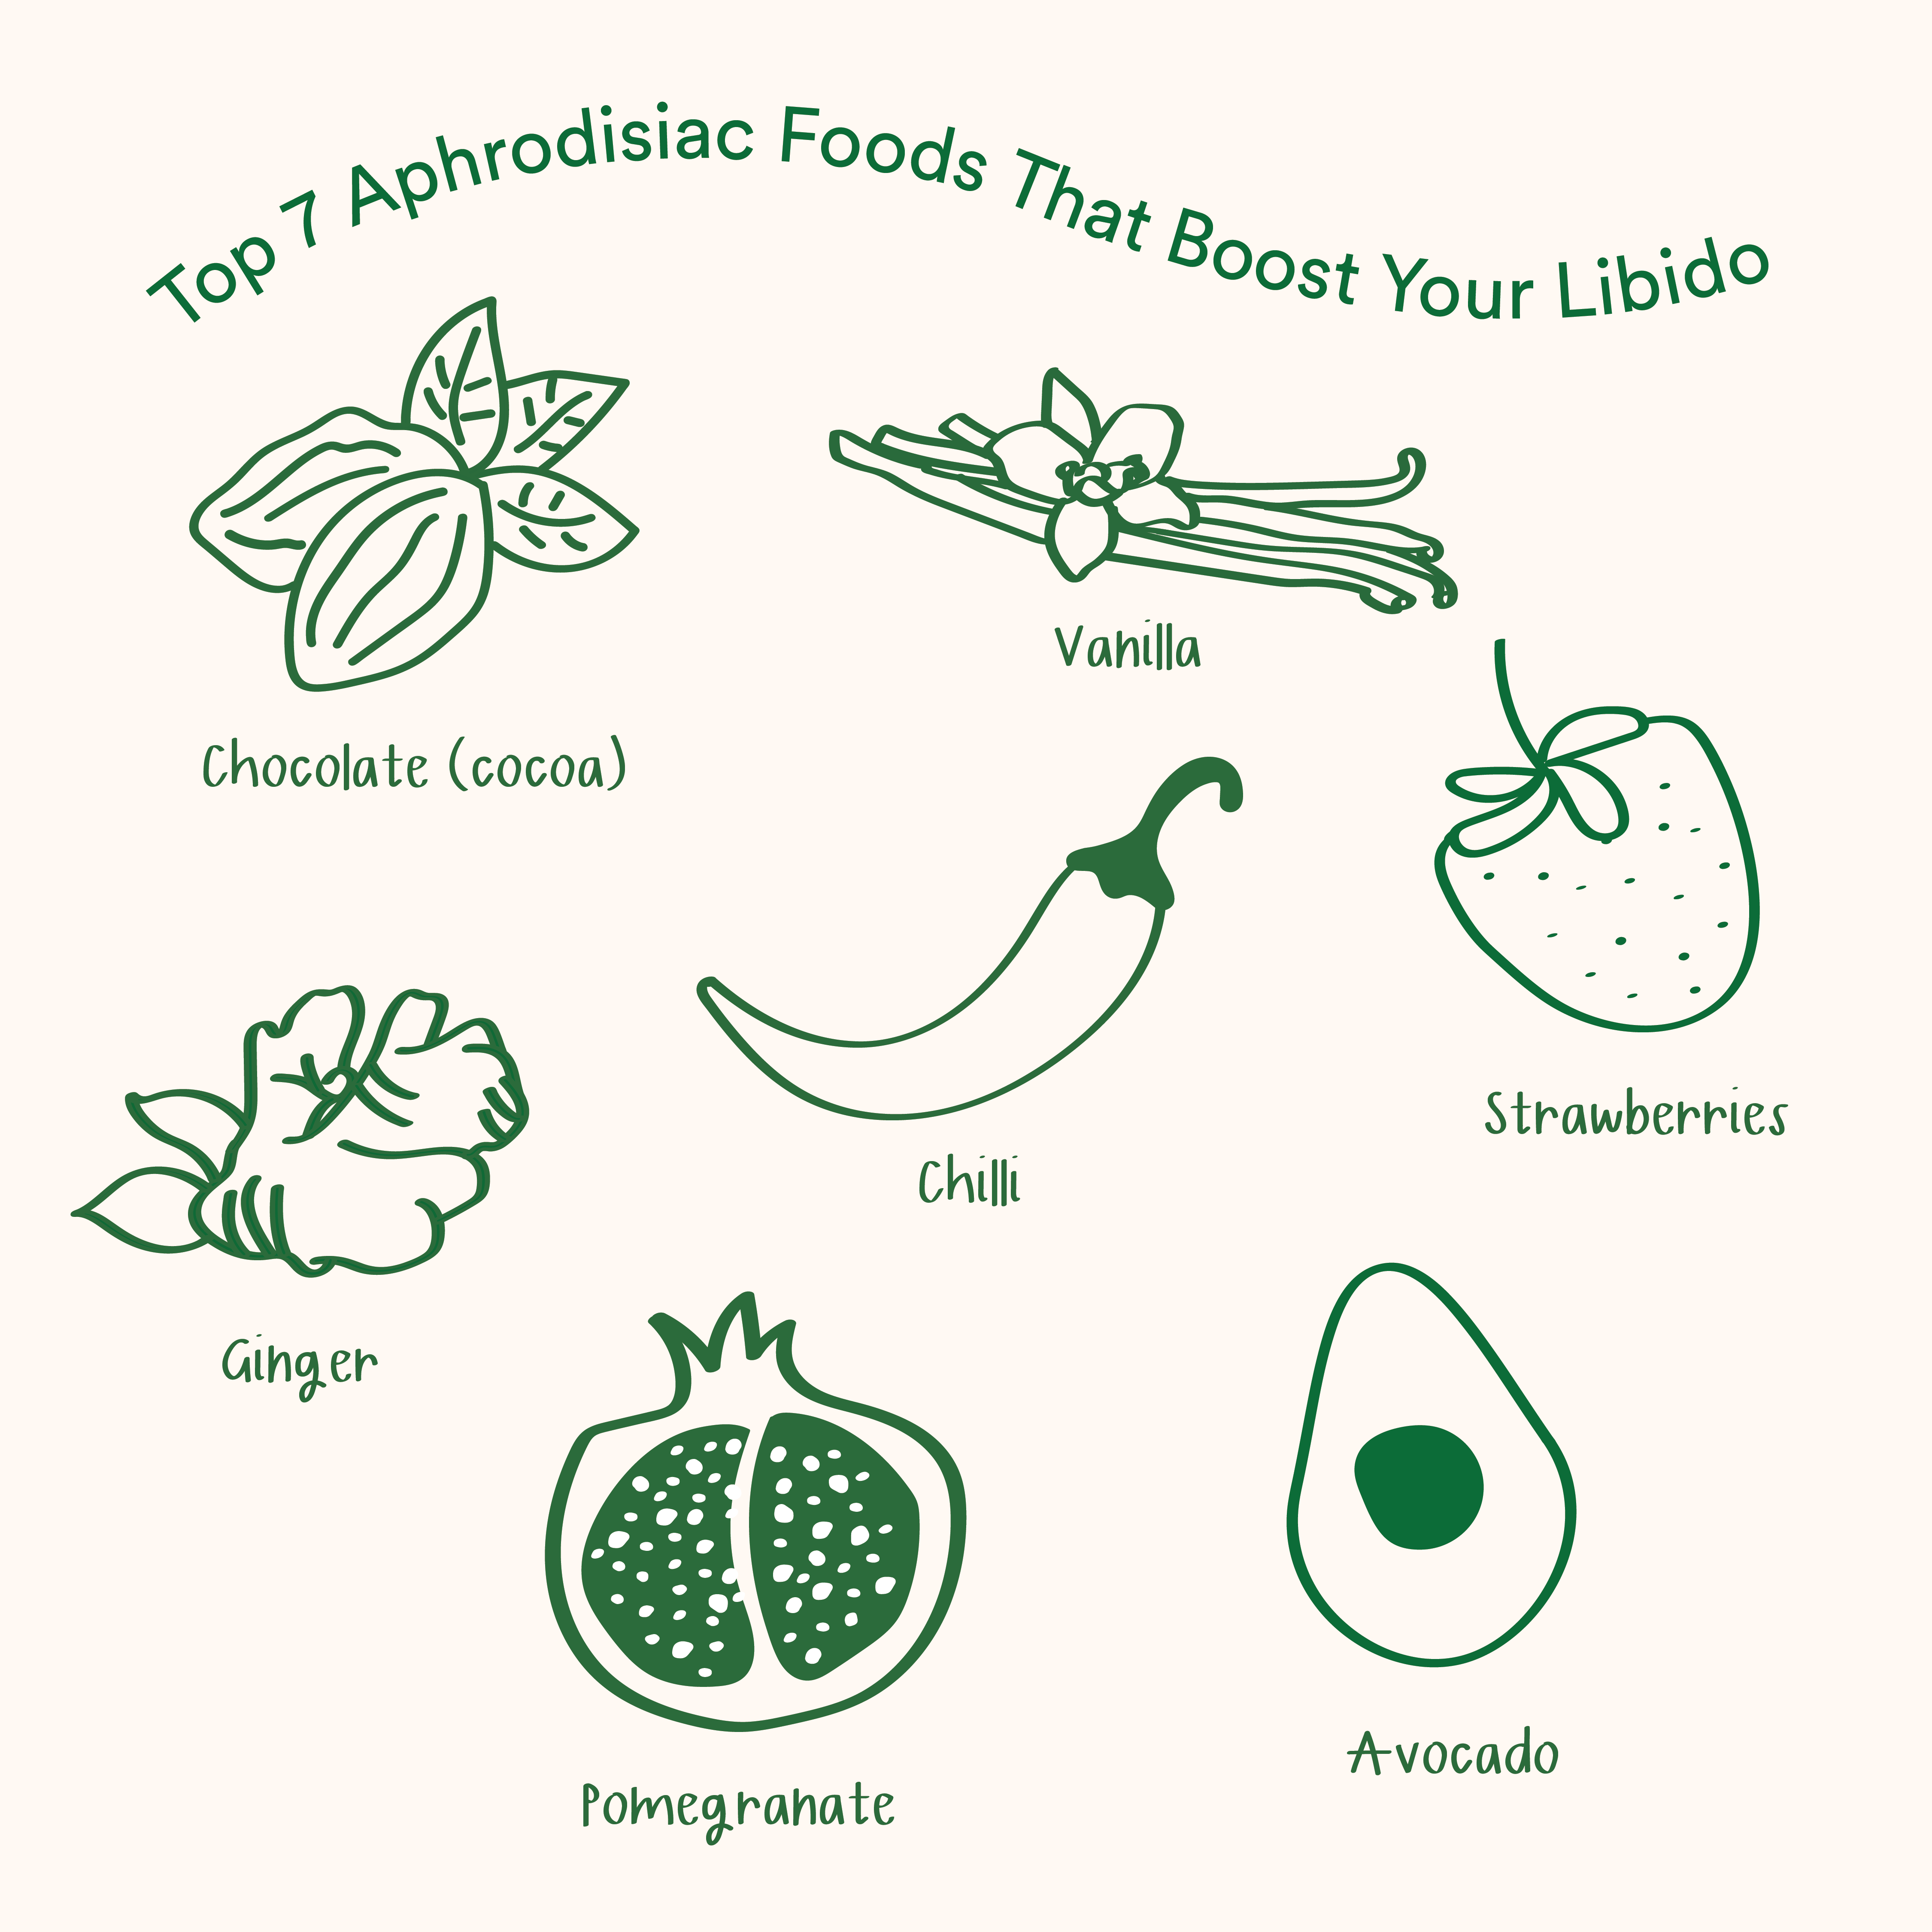 Top aphoridisiac foods to boost your libido